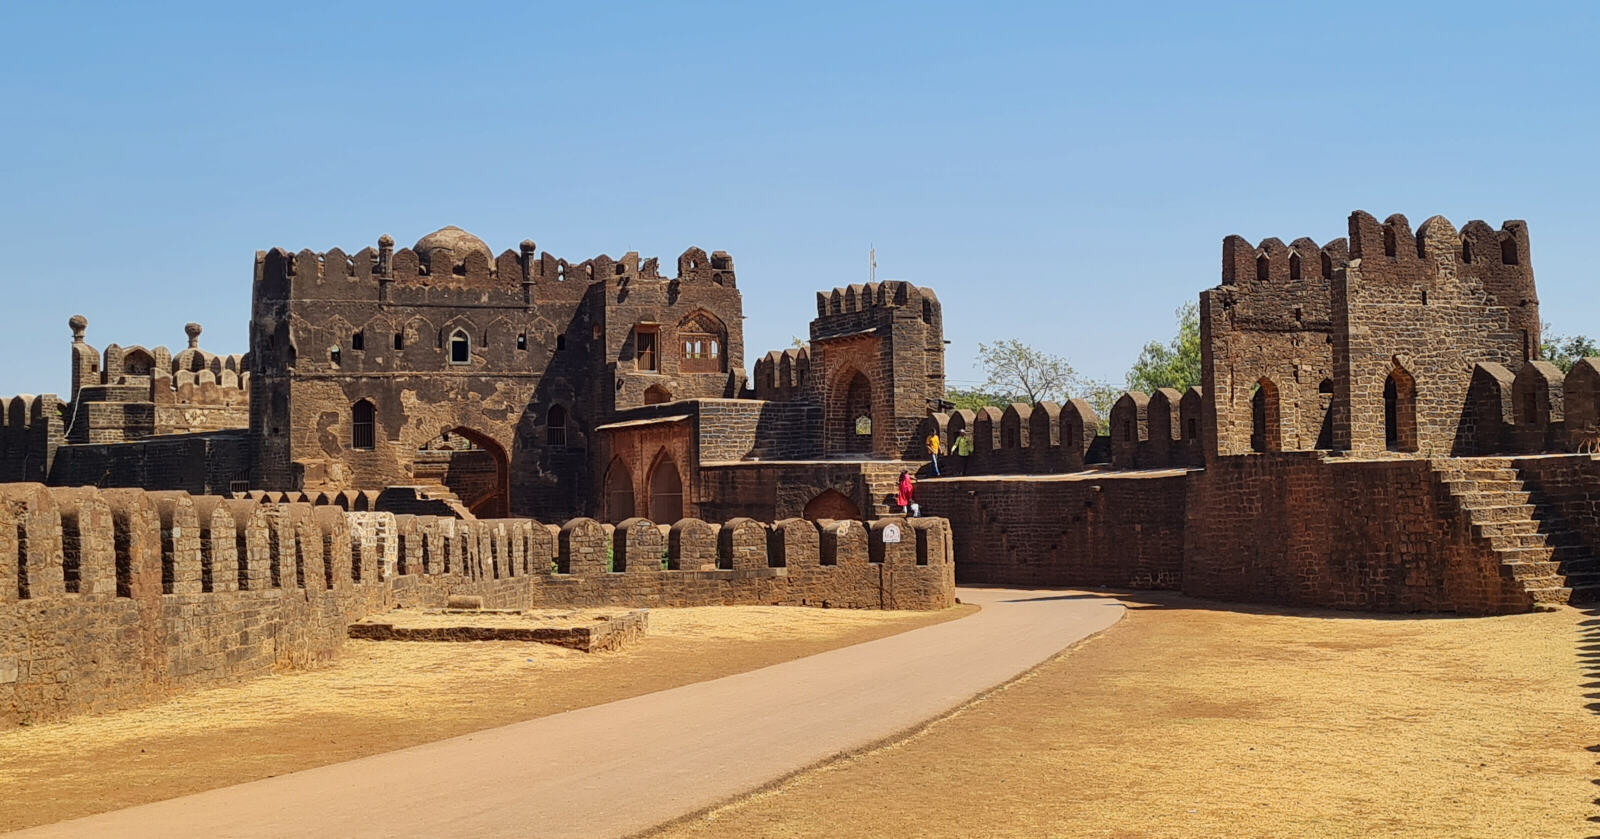 Main entrance gate to Bidar fort, Karnataka, India